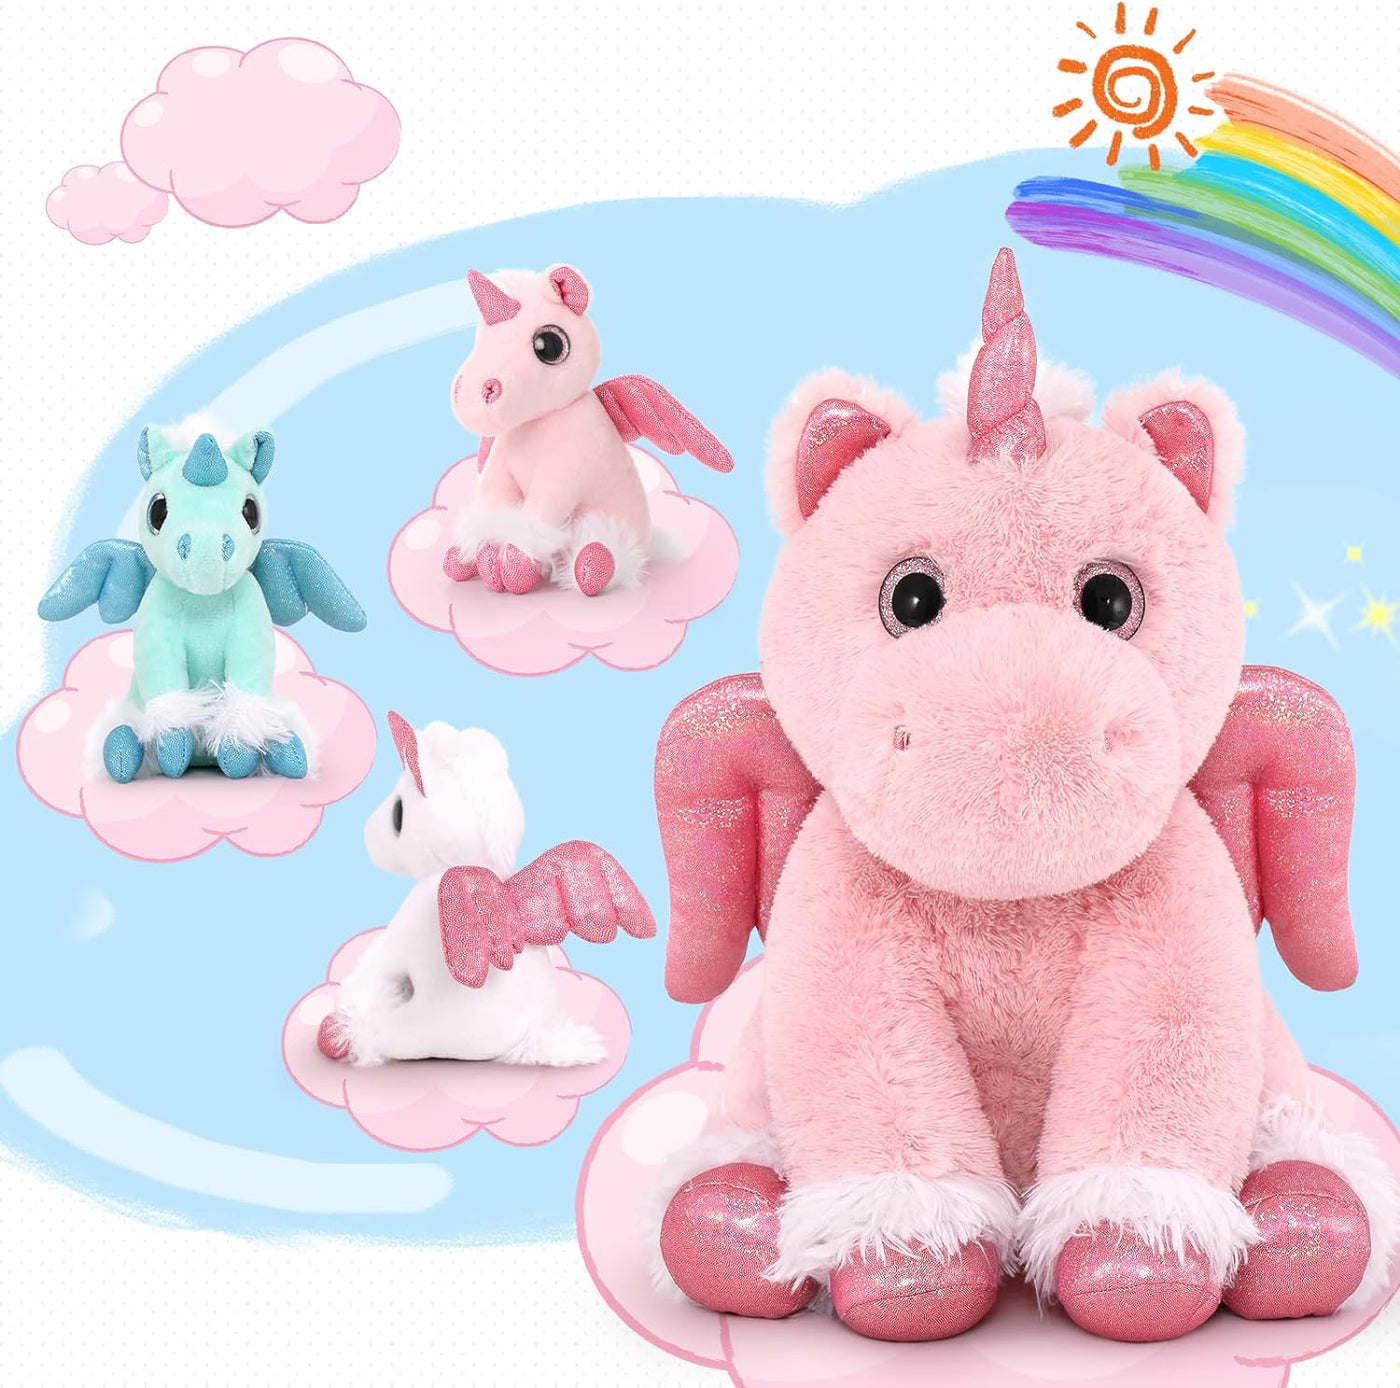 Magical Unicorn Plush Toy Set, Pink, 19.7 Inches